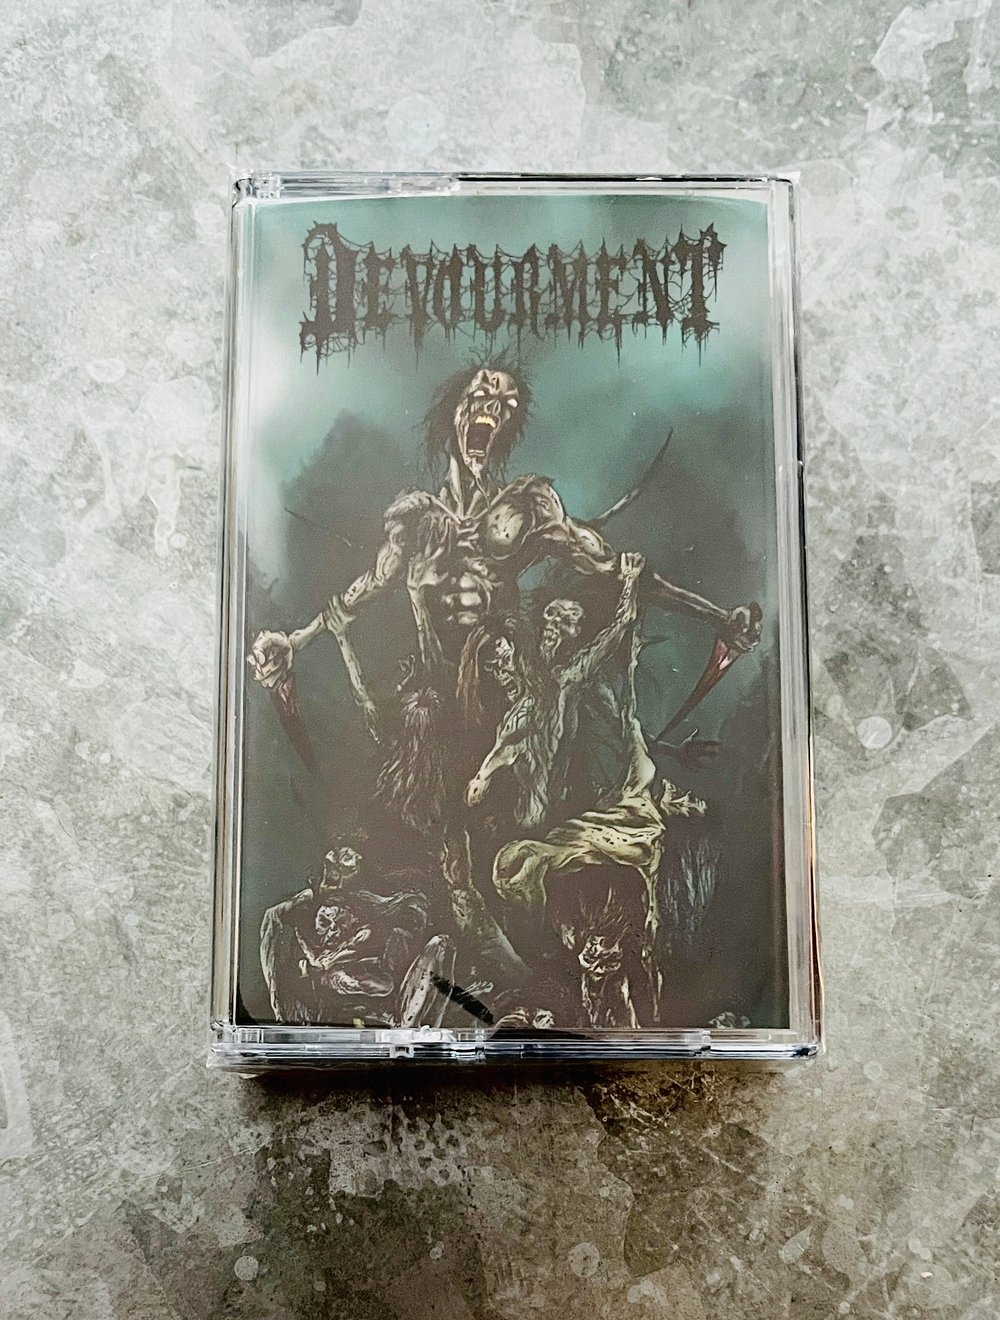 DEVOURMENT - Butcher The Weak Cassette